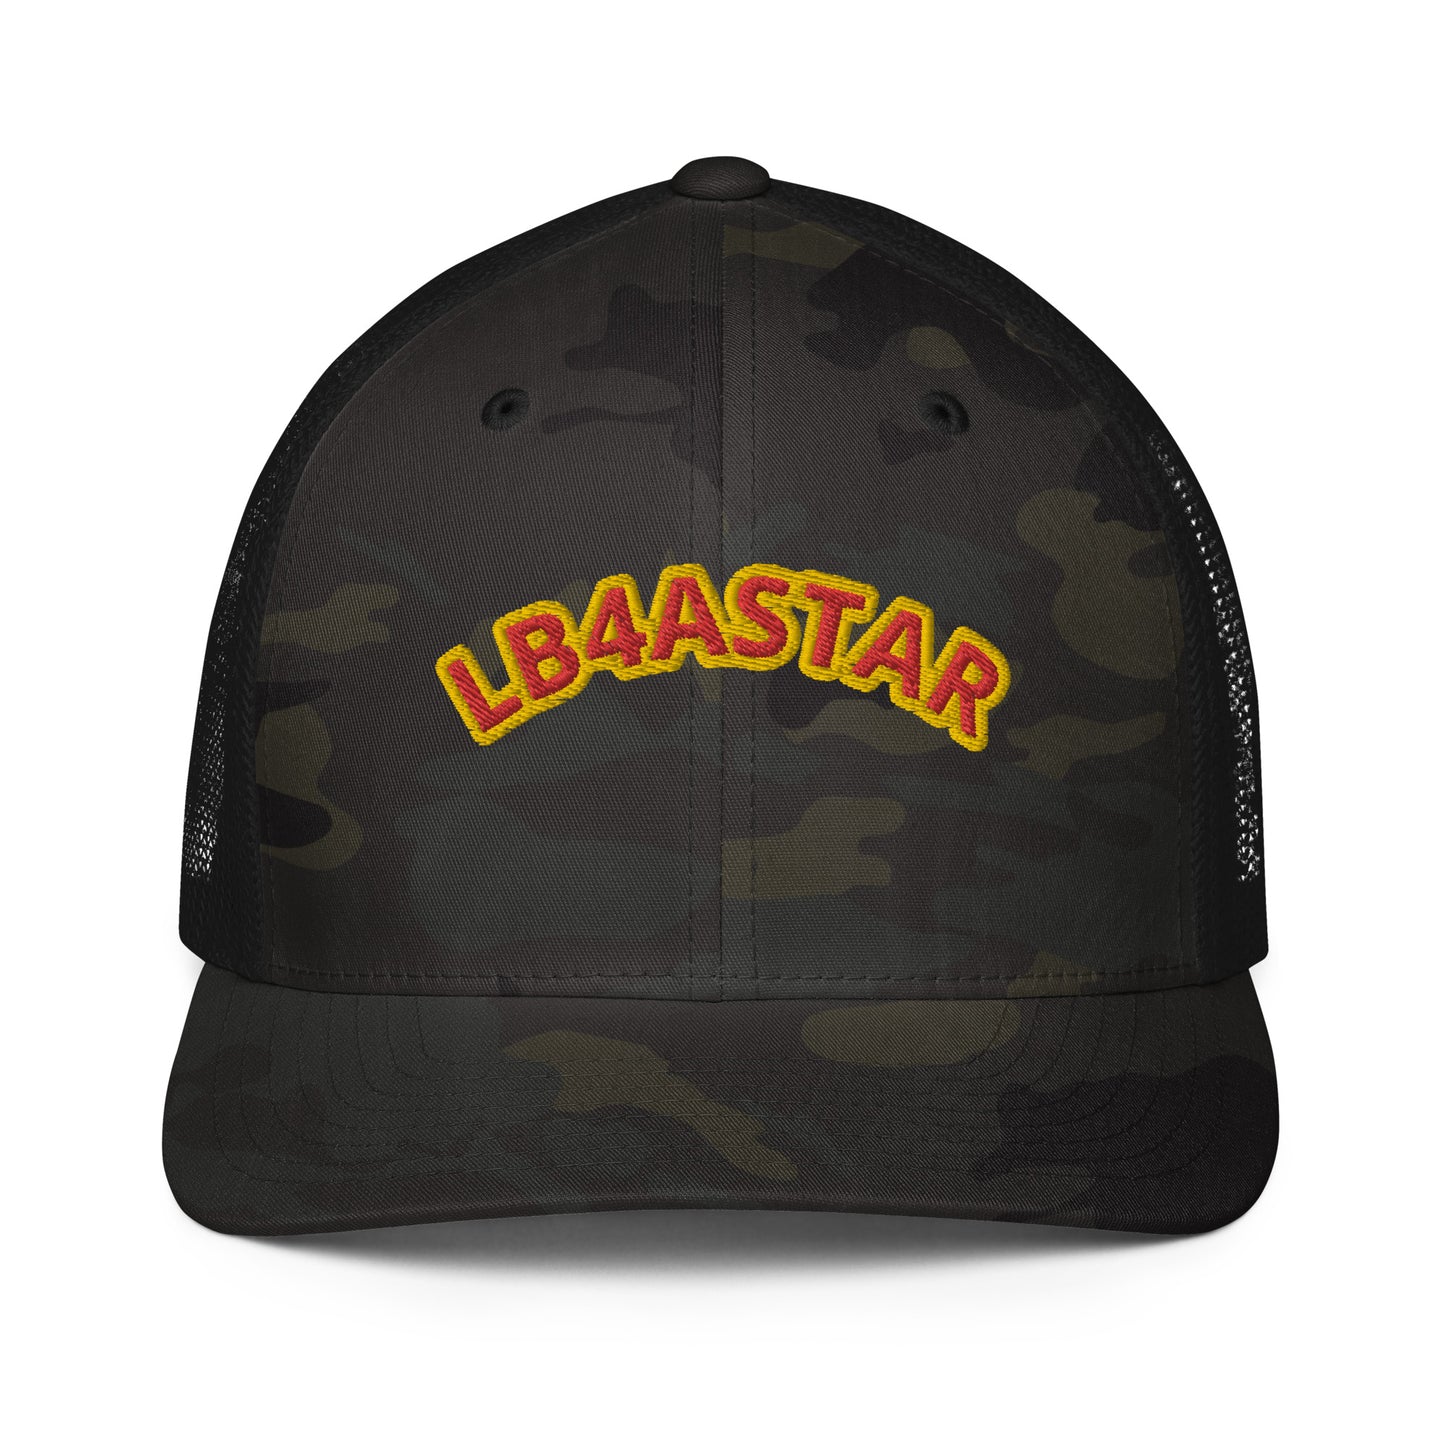 LB4ASTAR trucker cap